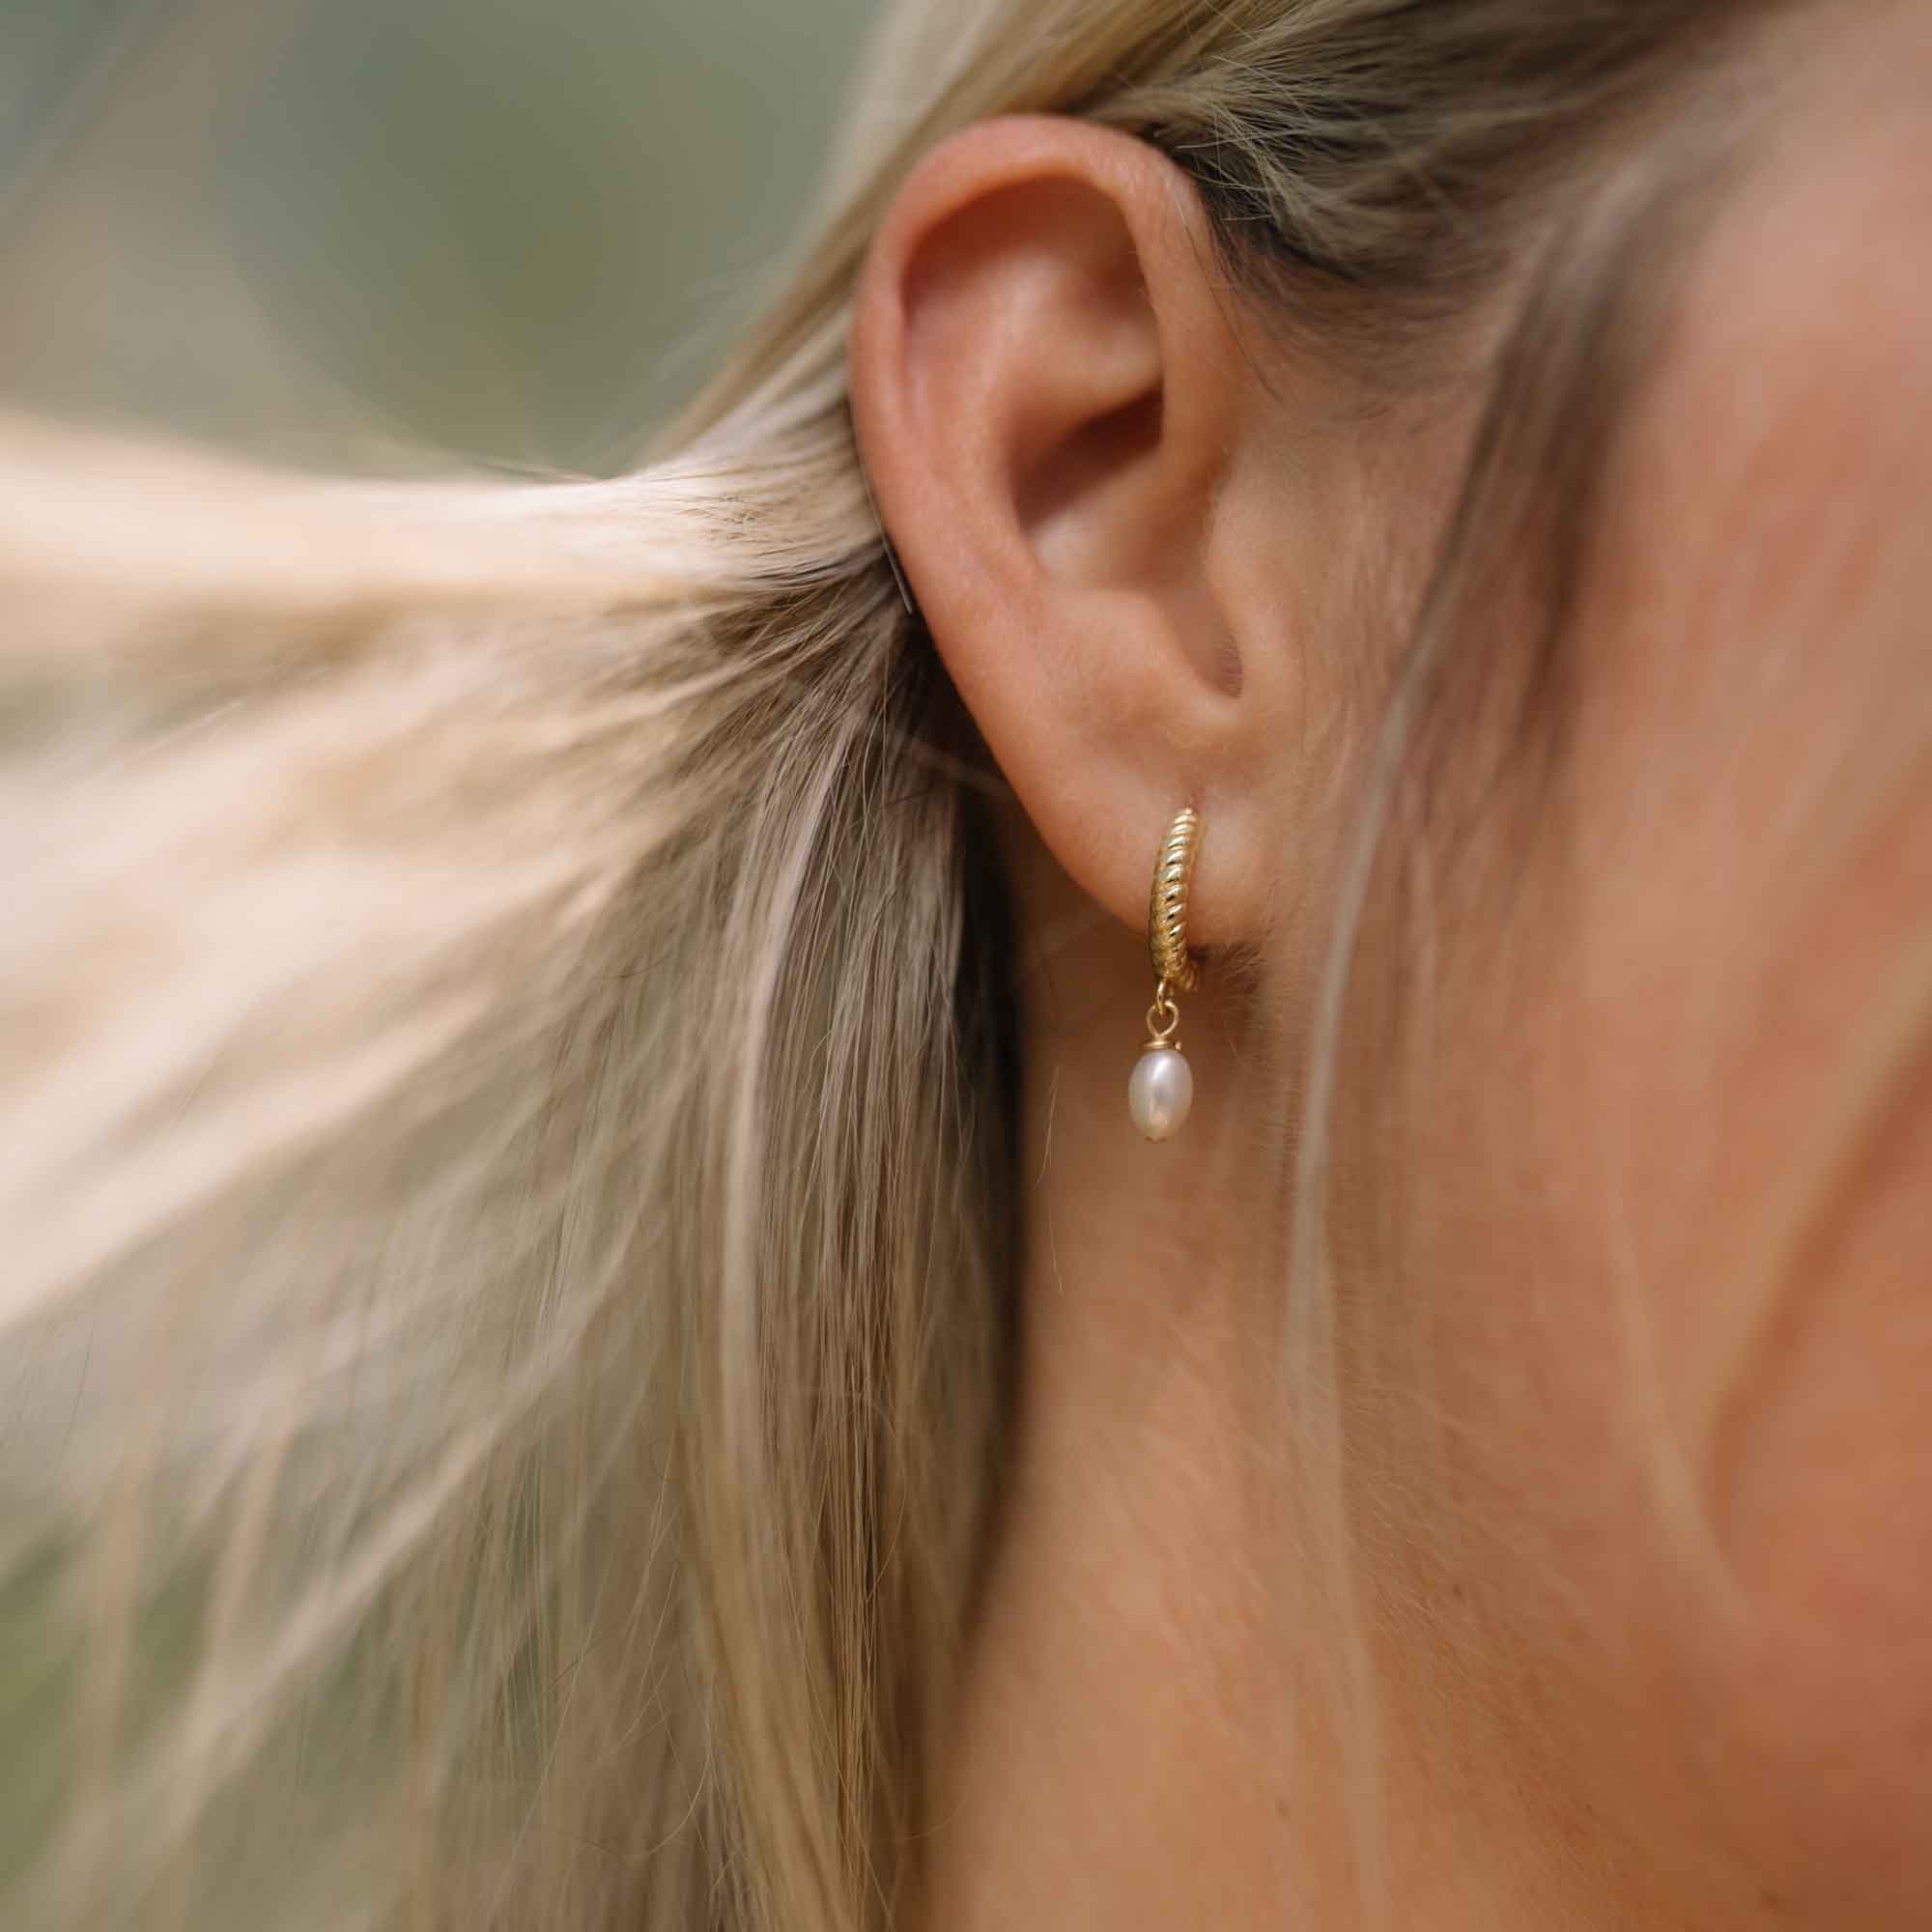 pearl and gold huggie earrings small hoops